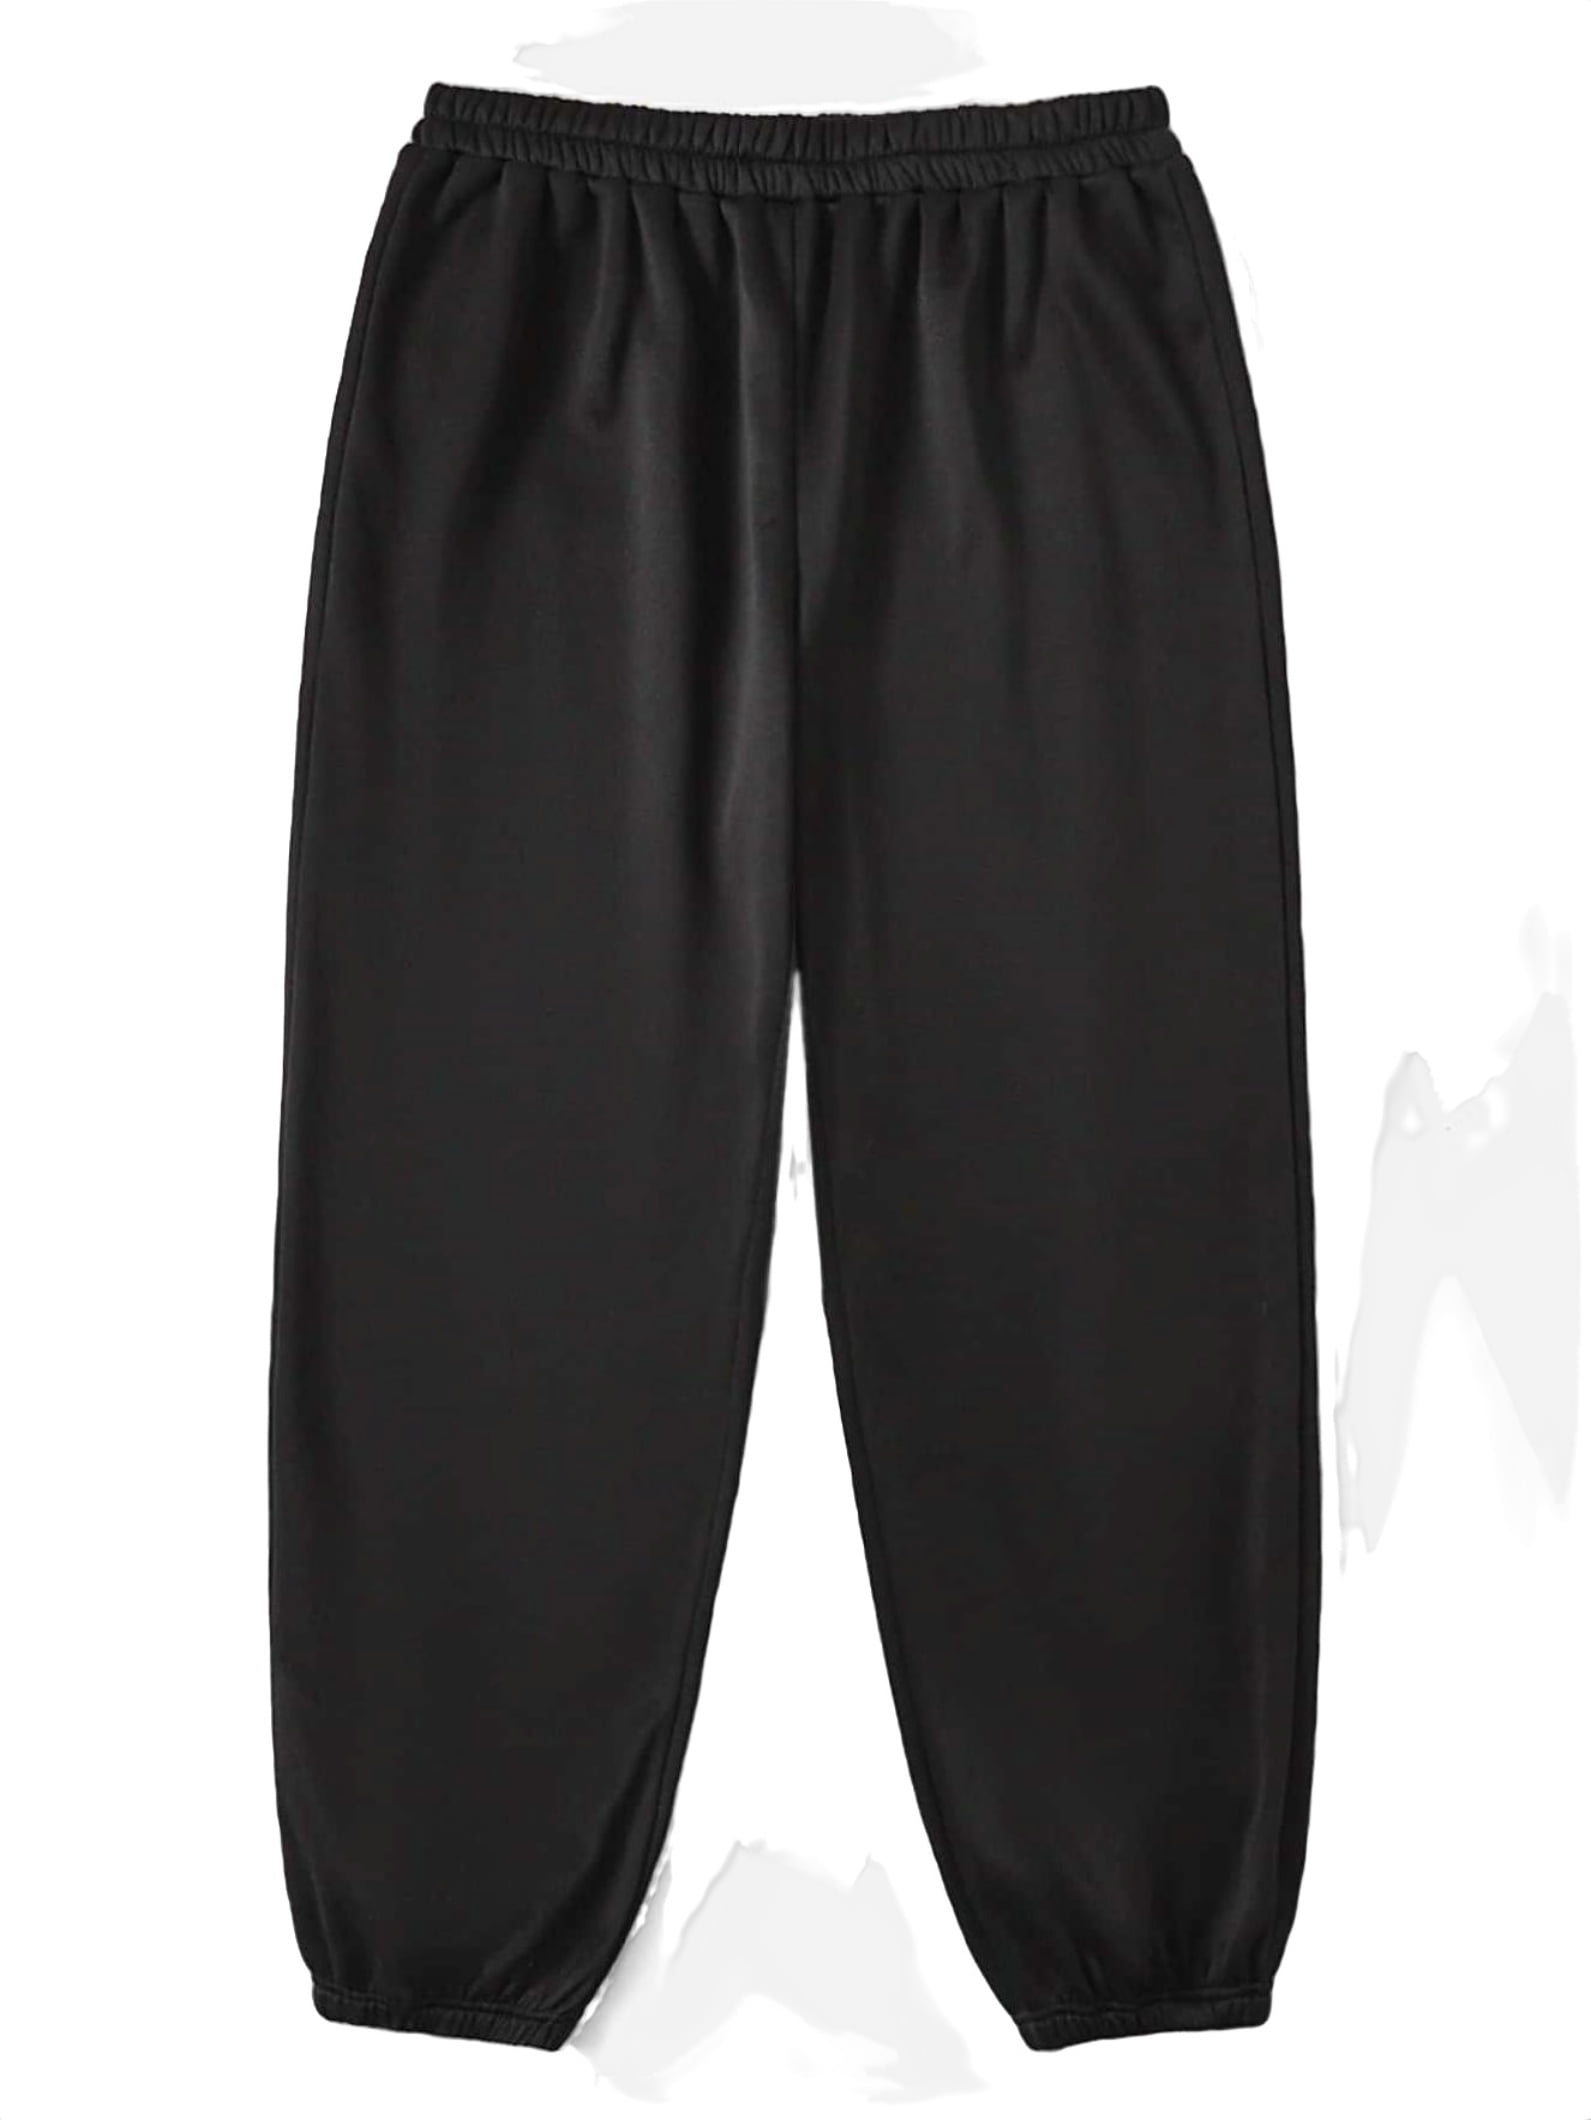 Solid Jogger Black Plus Size Sweatpants - Walmart.com